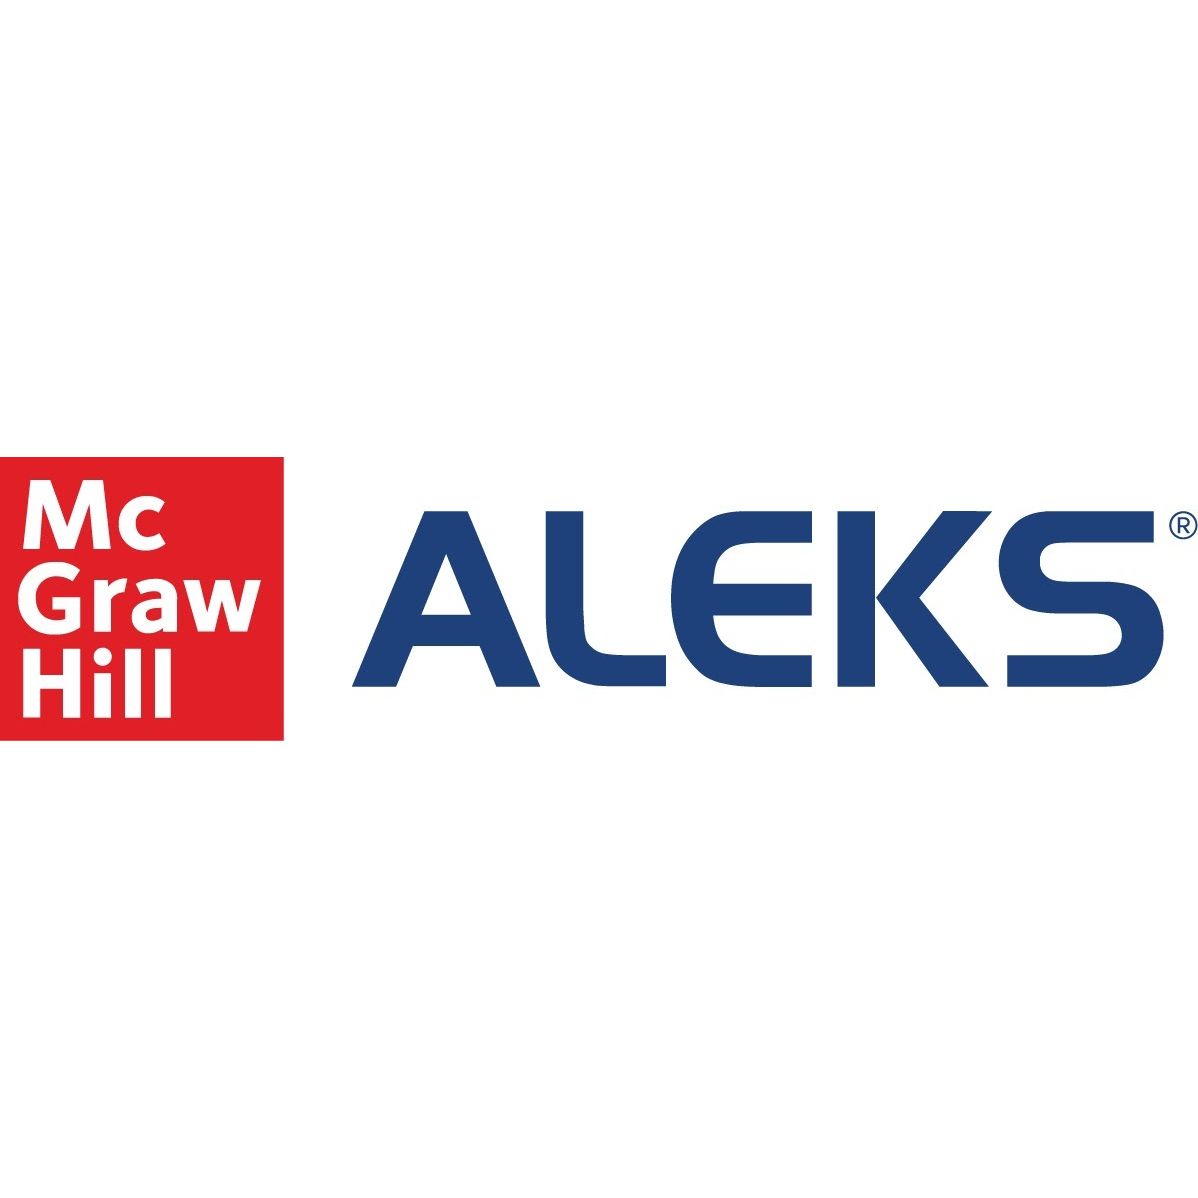 Aleks Logo